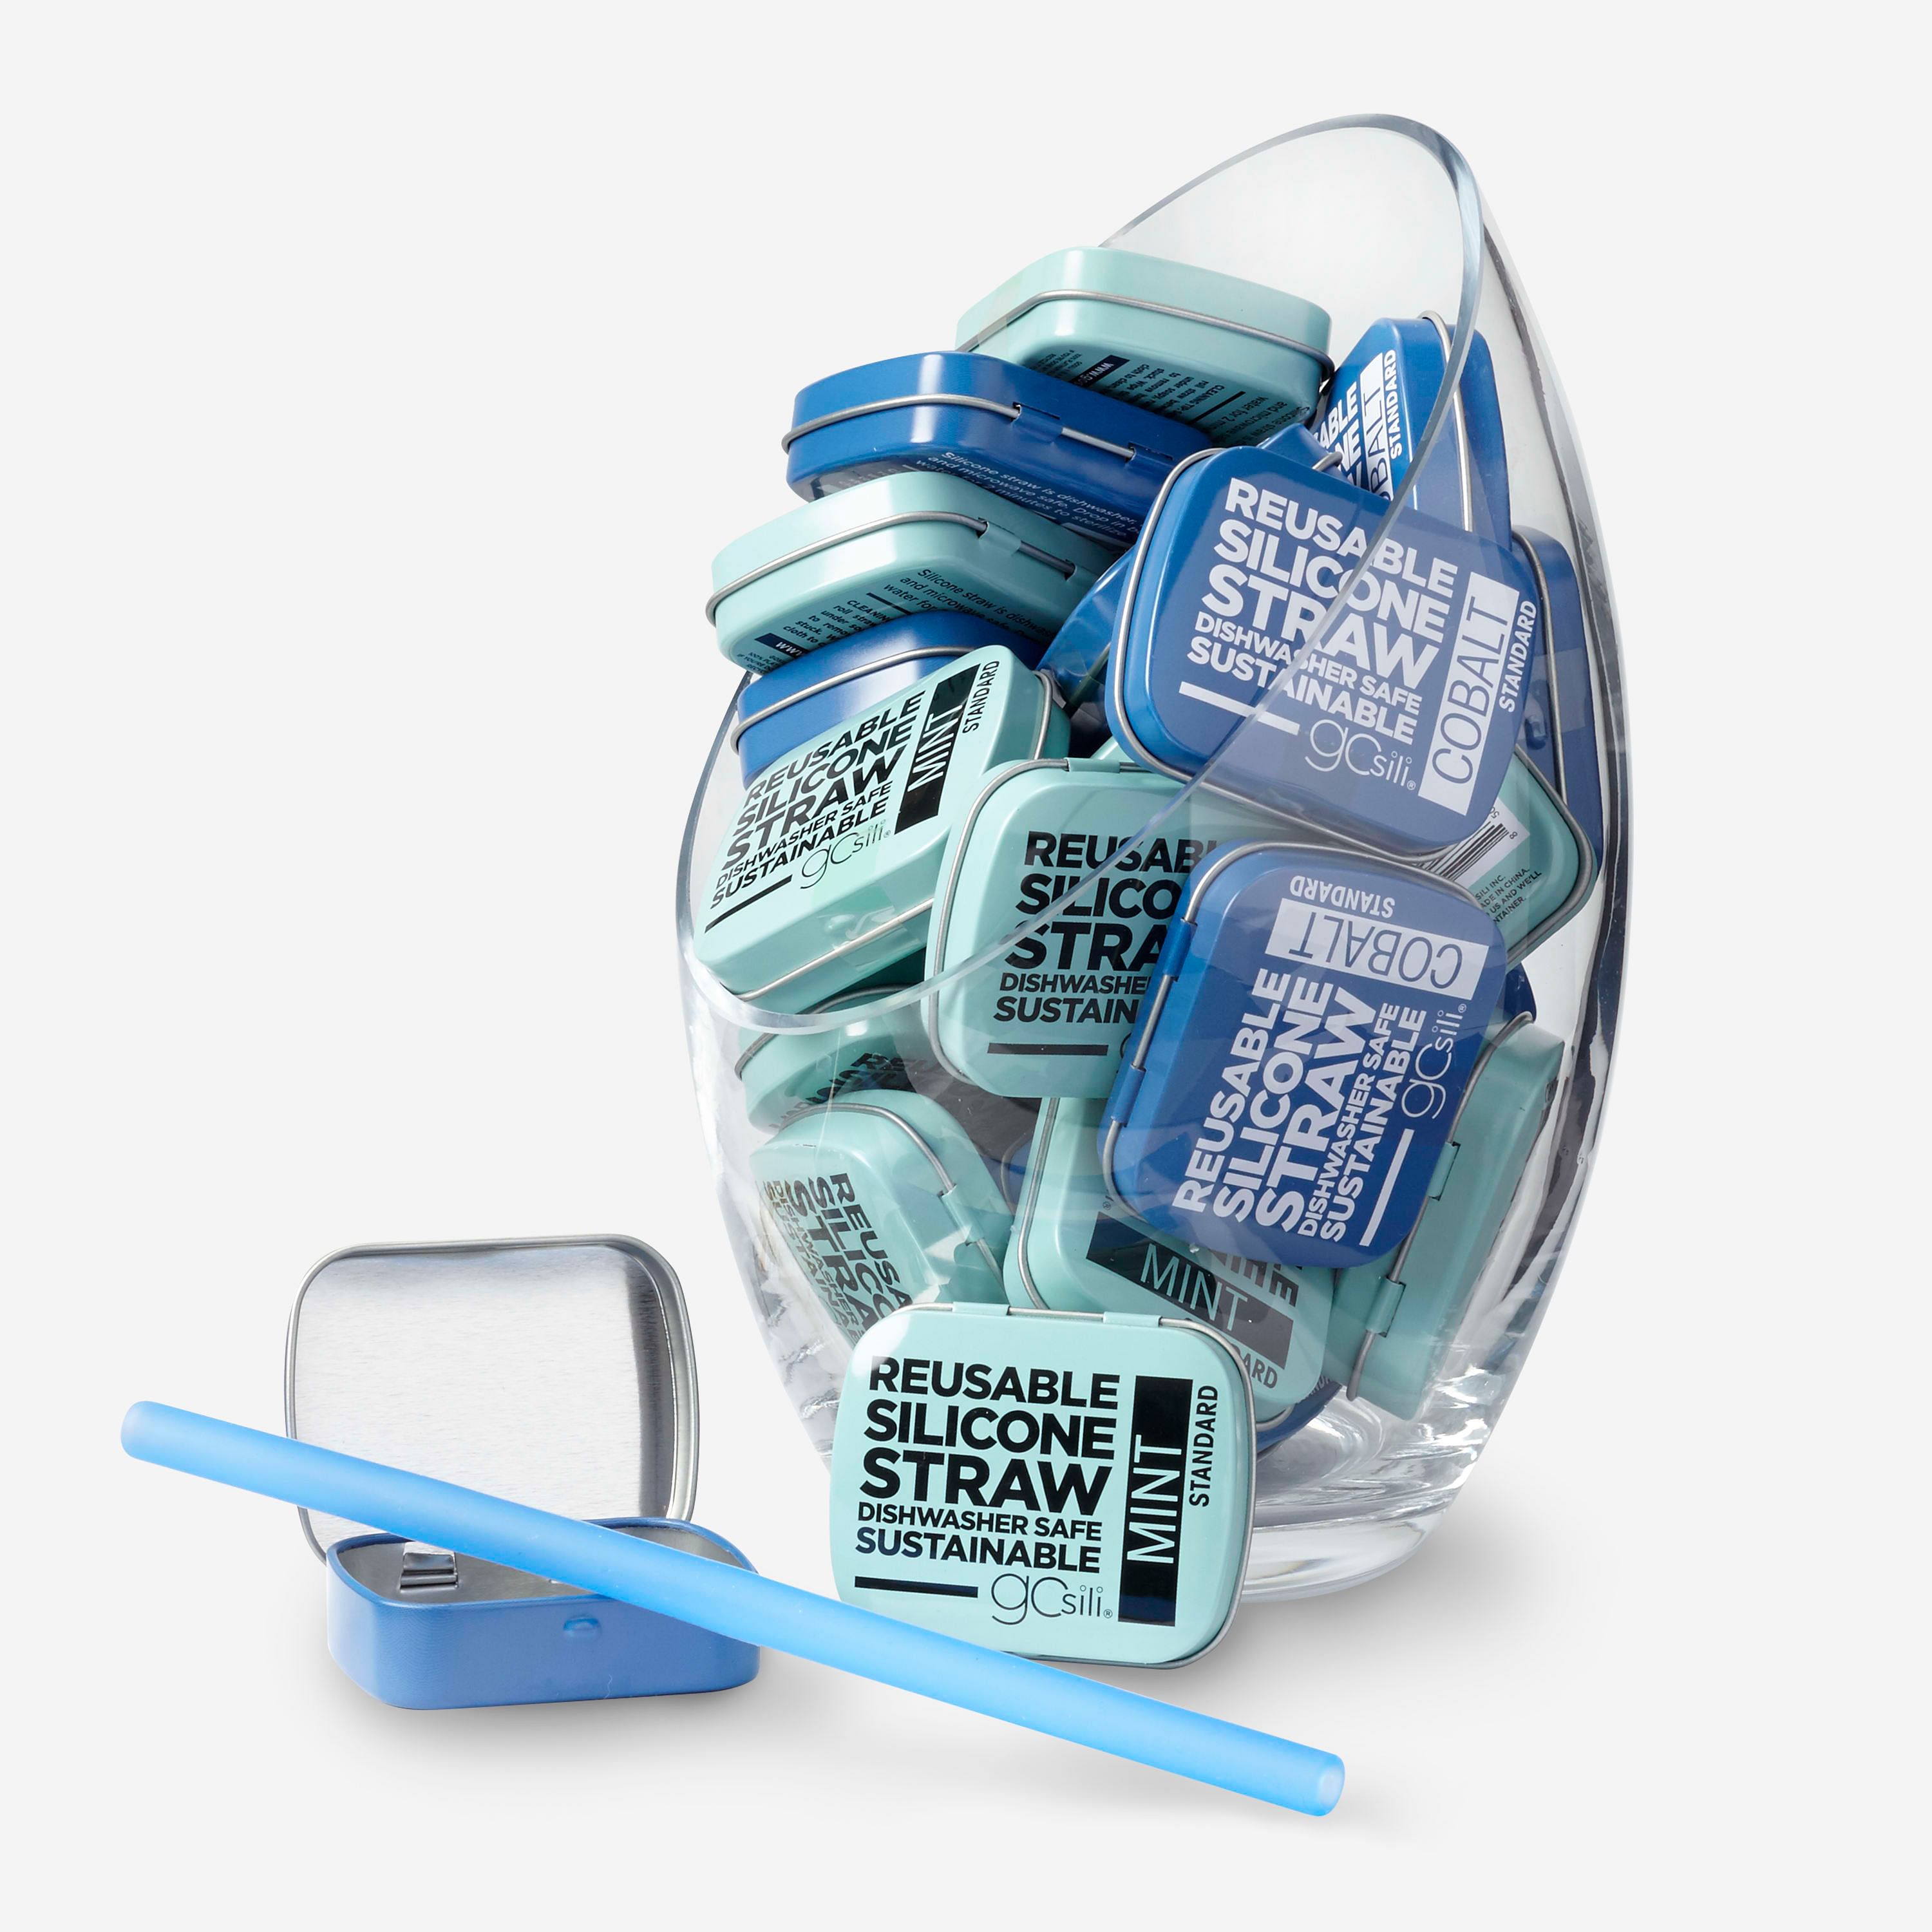 Reusable Glass Straw – Affordii